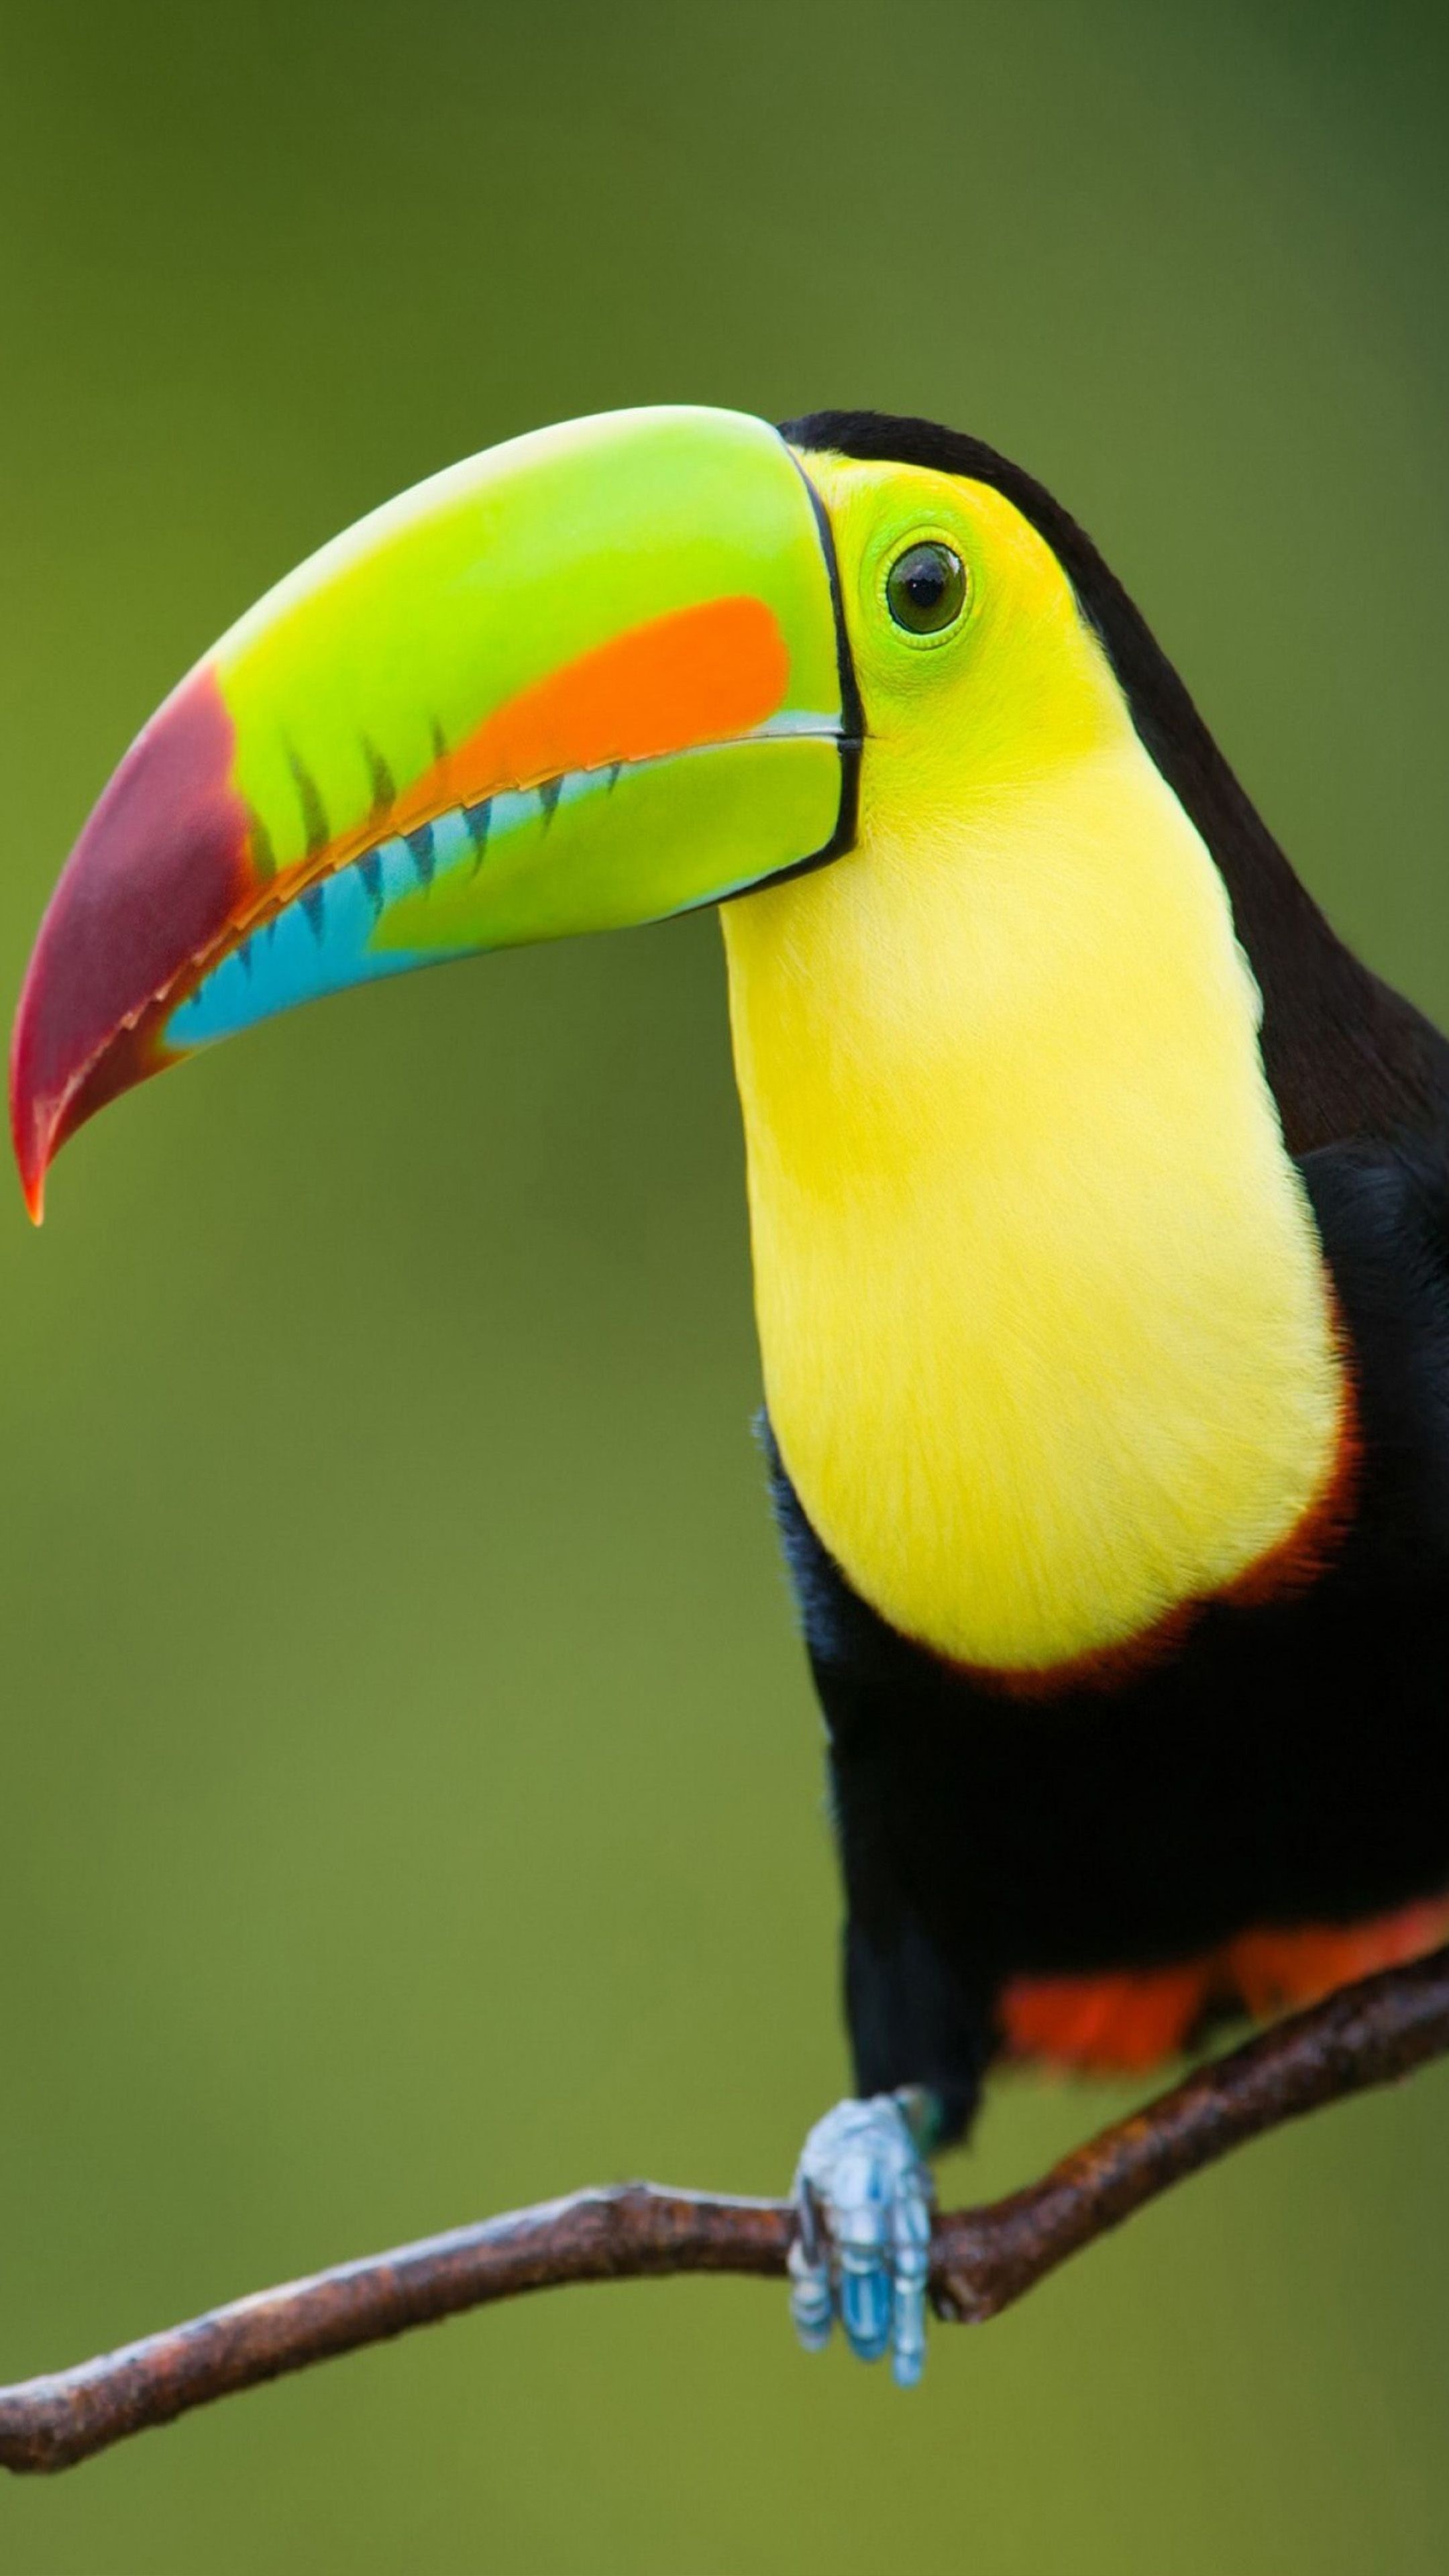 Aesthetic wallpaper, Colourful toucan, Nature photography, Stunning bird, 2160x3840 4K Handy